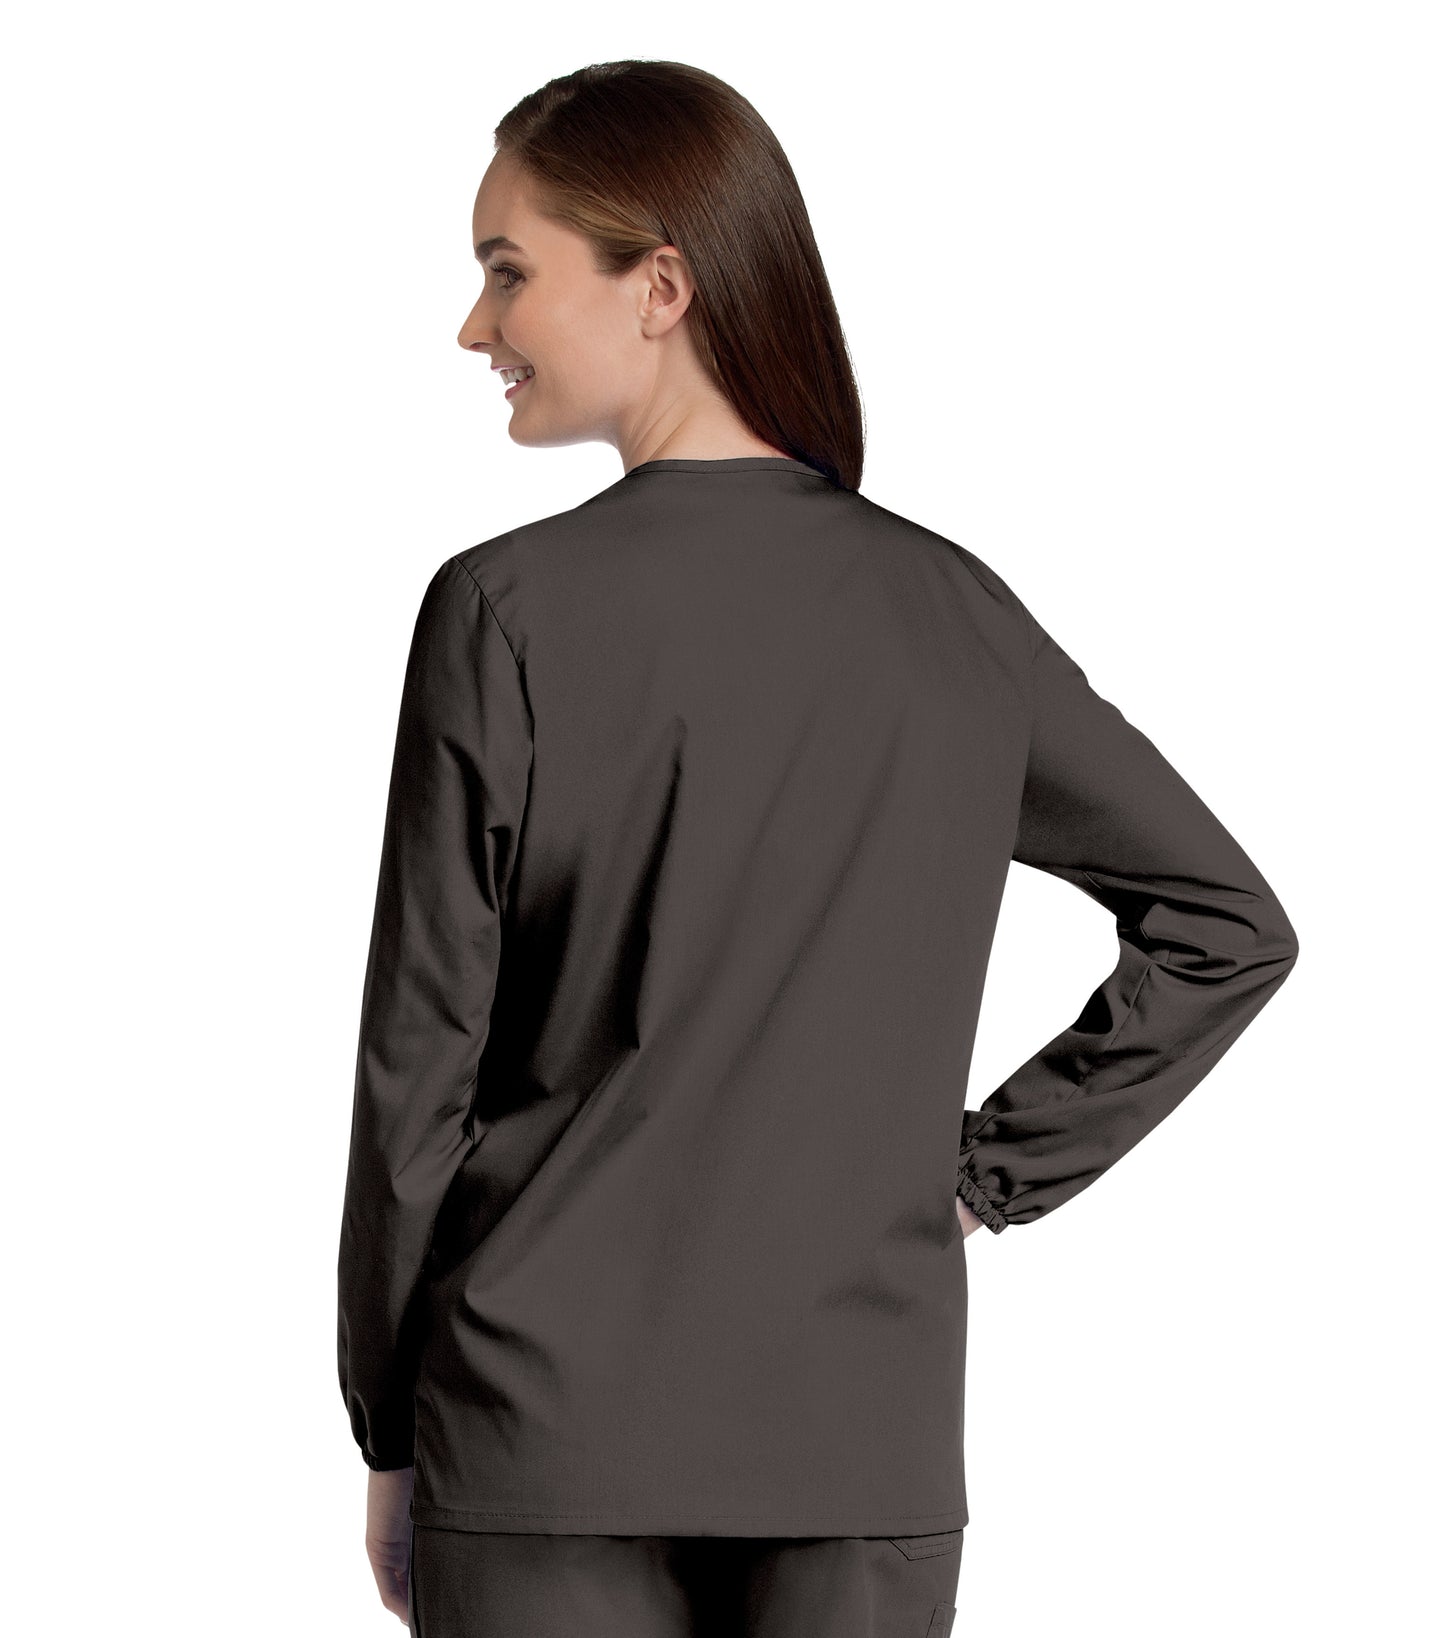 Women's 2-Pocket Scrub Jacket